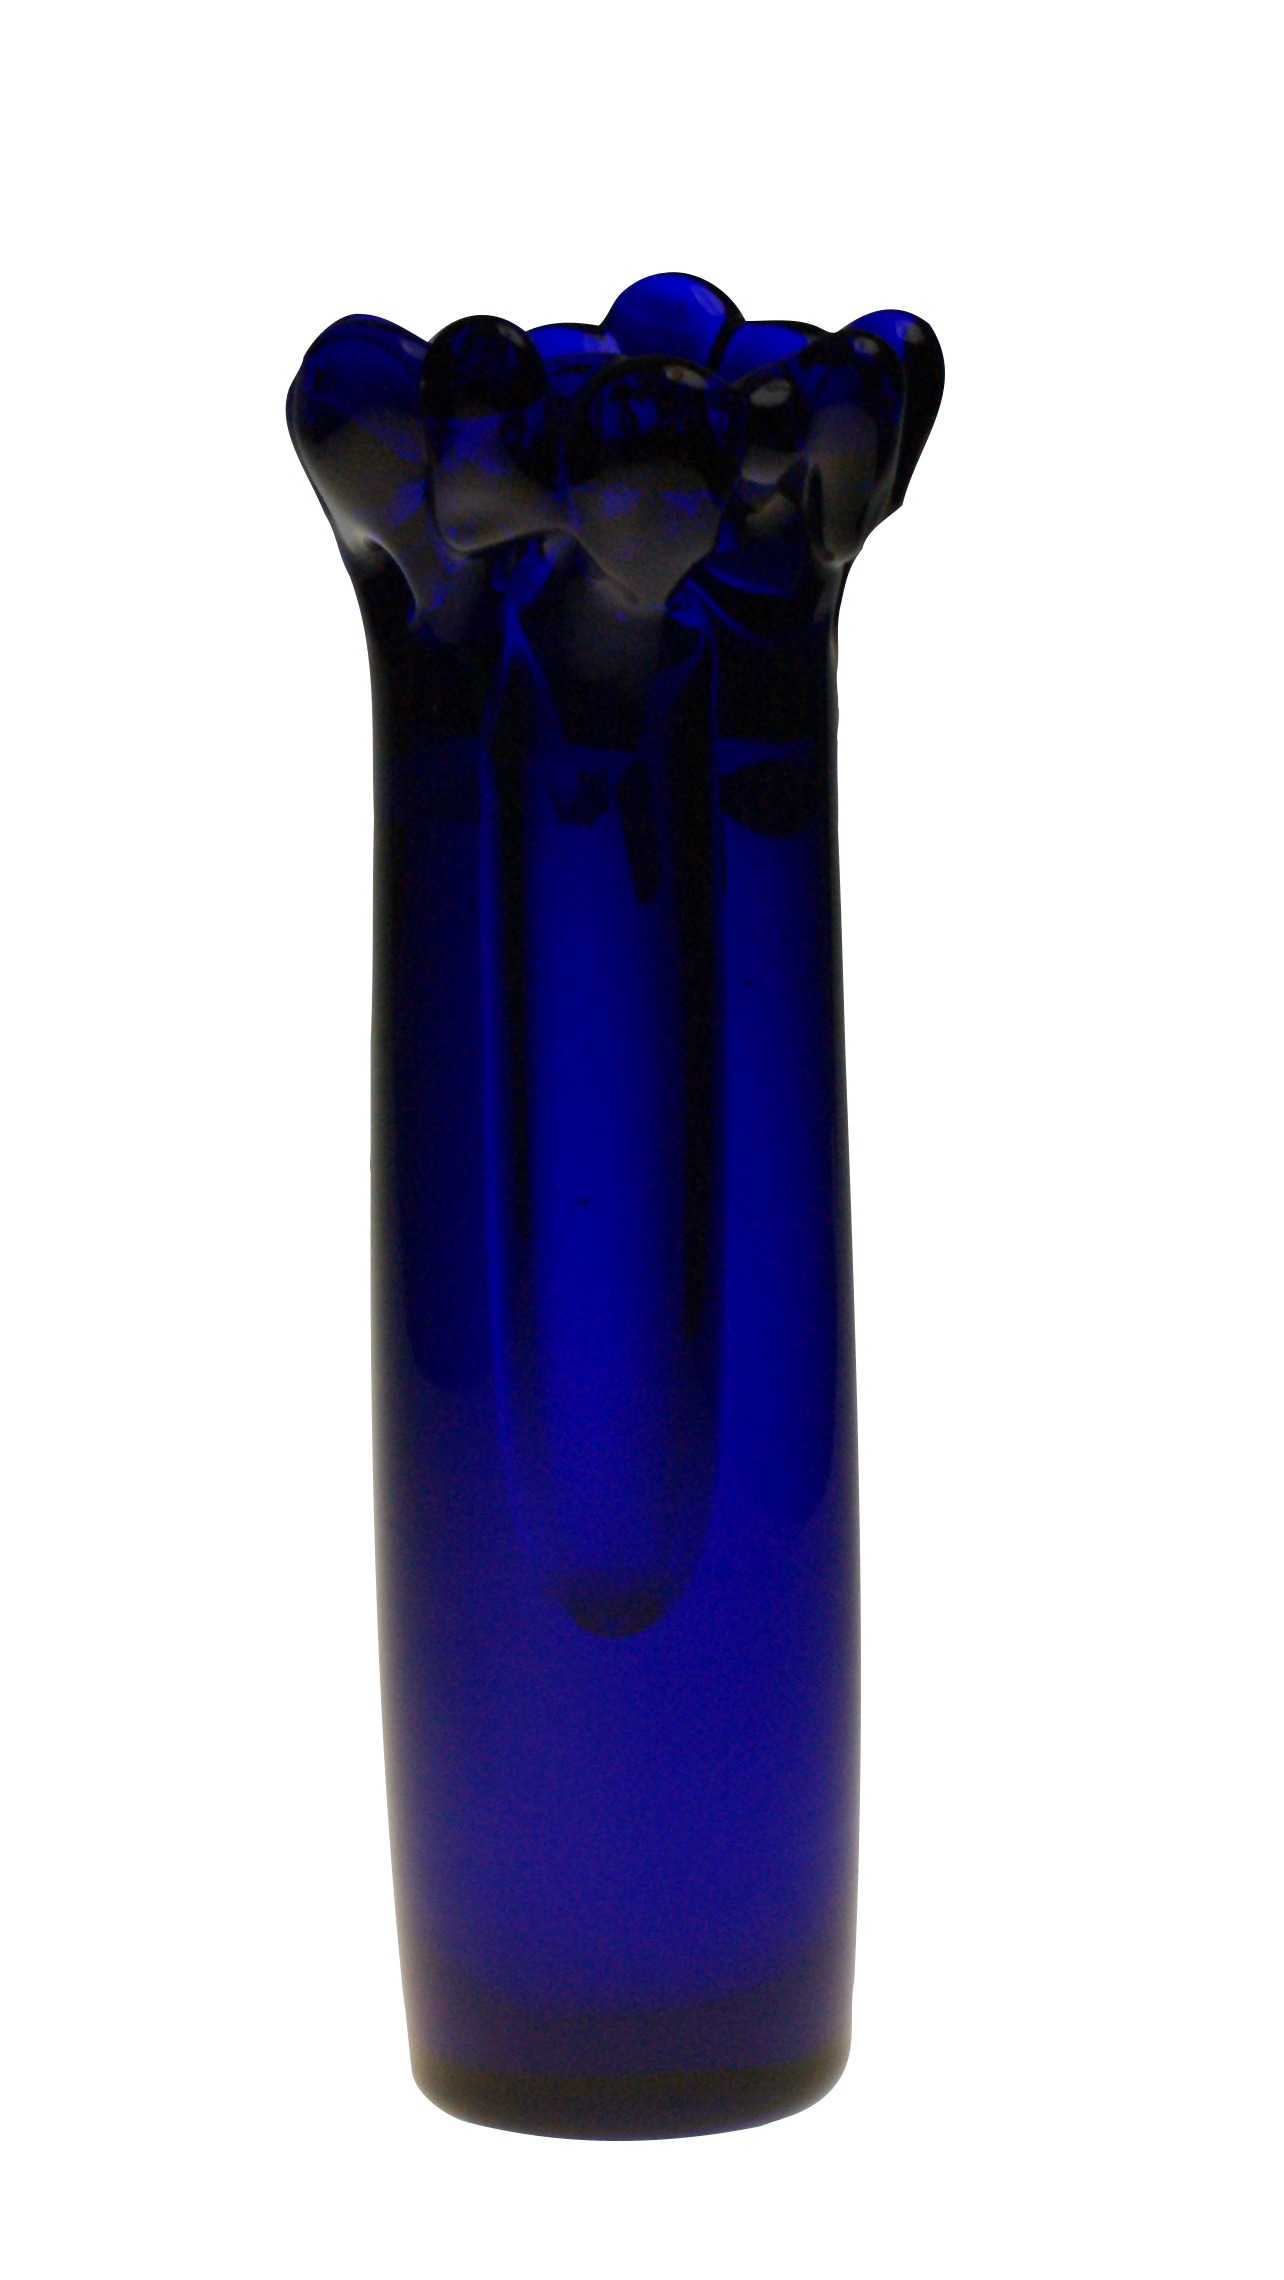 F. Vízner - 7338/27, Vase